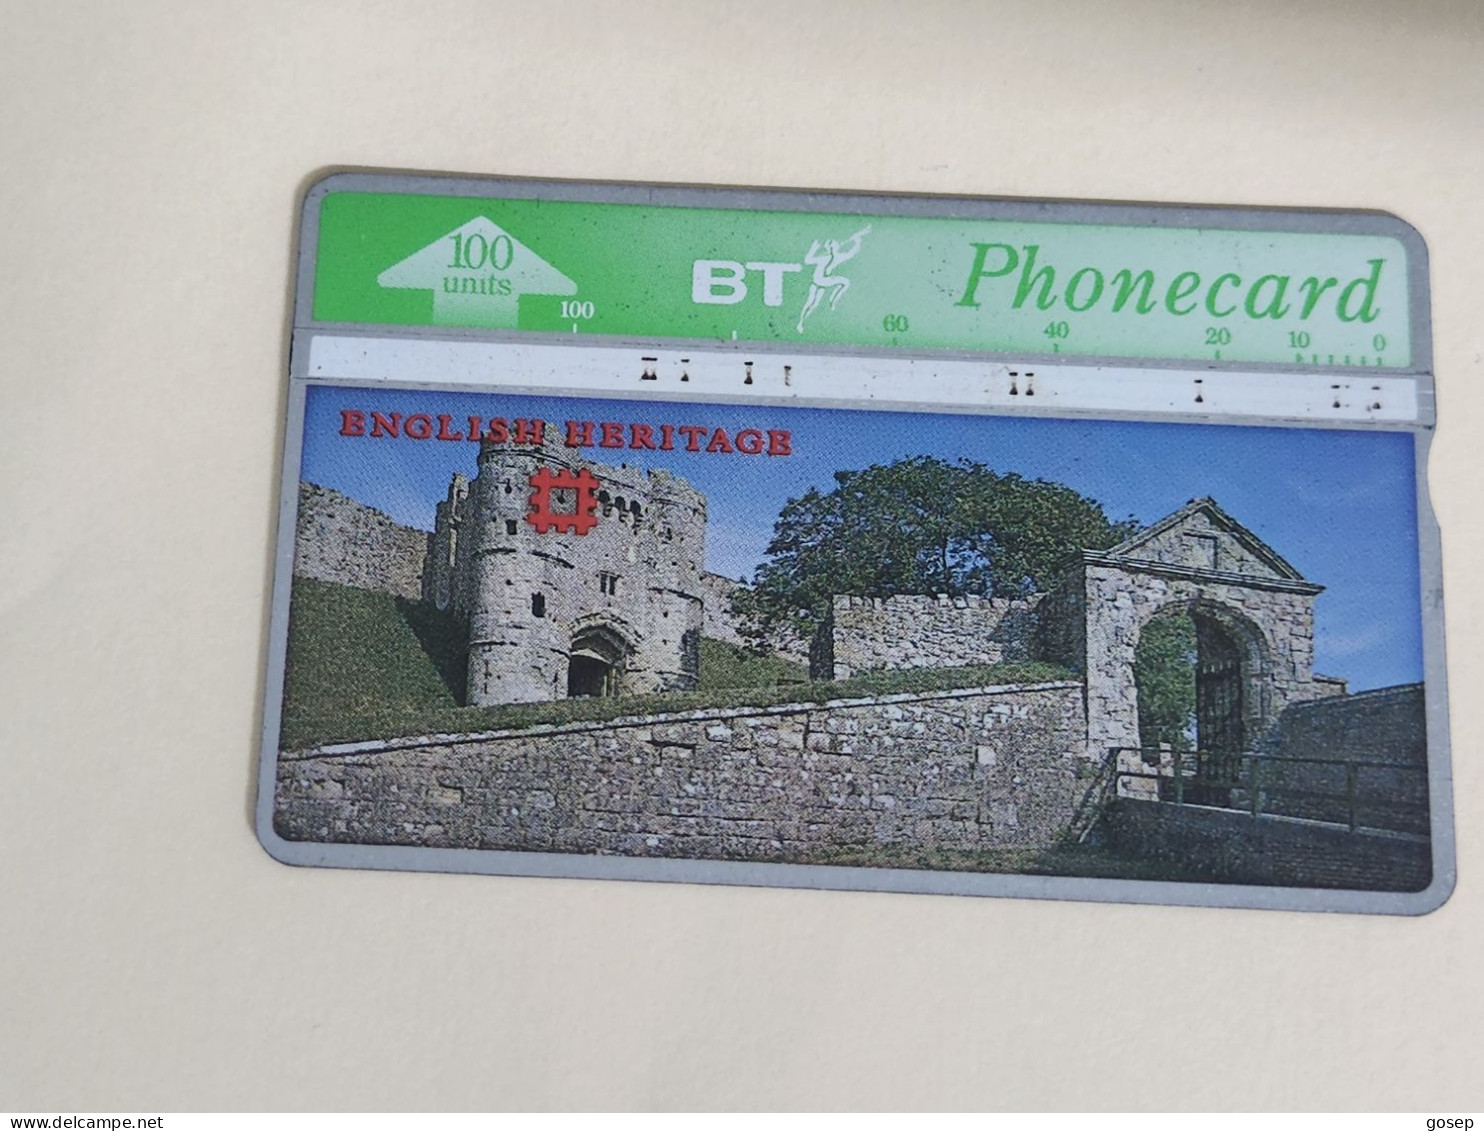 United Kingdom-(BTA115)HERITAGE-Carisbrooke Castle-(197)(100units)(527H69456)price Cataloge3.00£-used+1card Prepiad Free - BT Werbezwecke